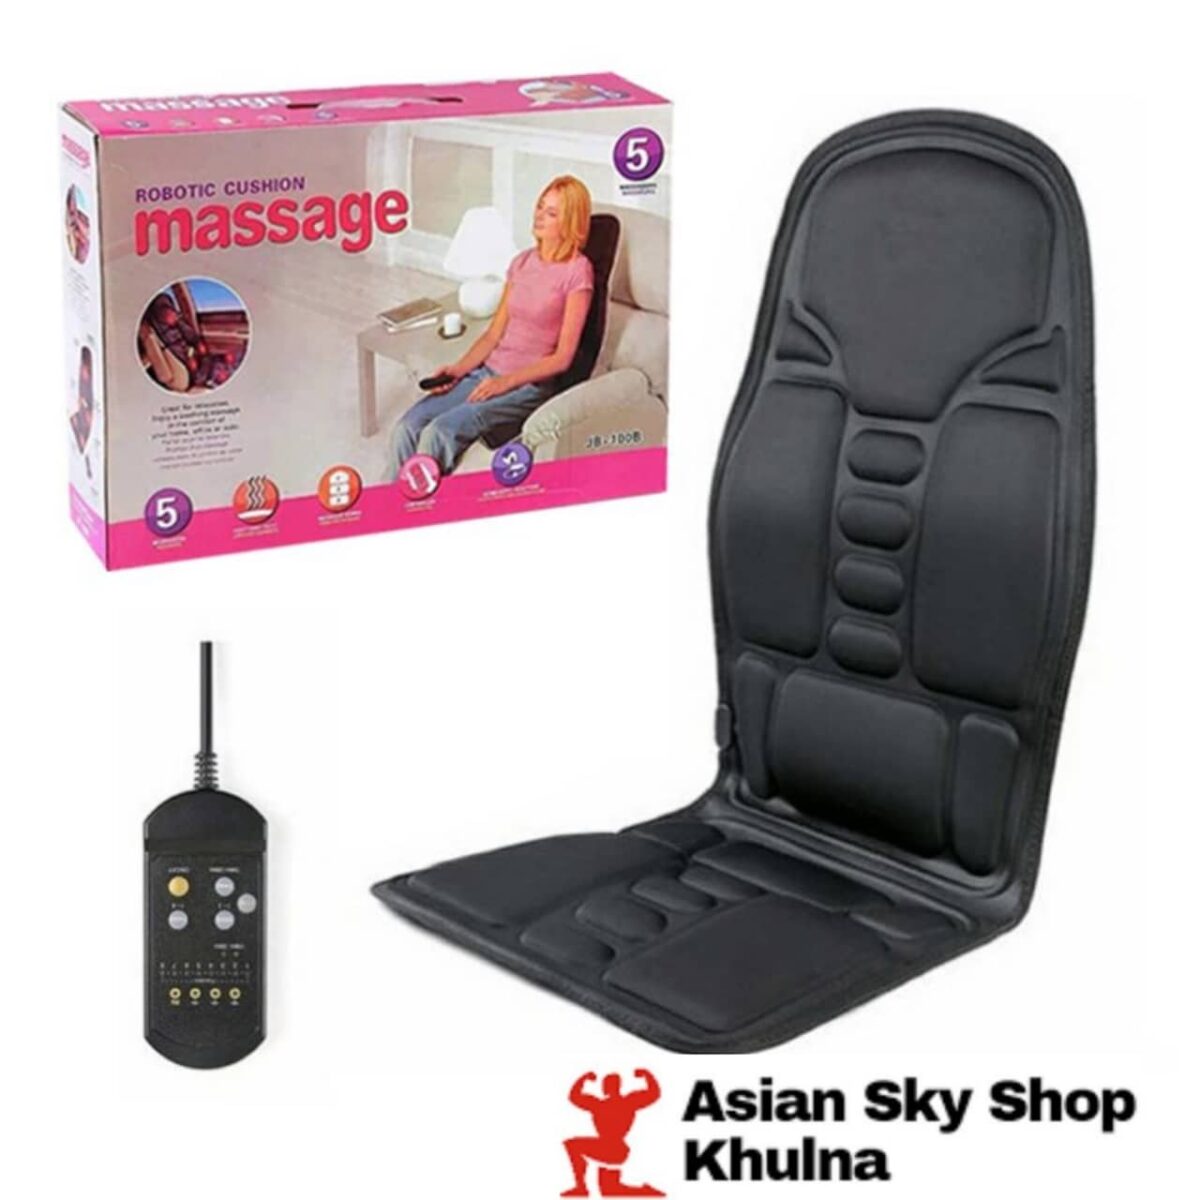 Robotic Cushion Massage Seat